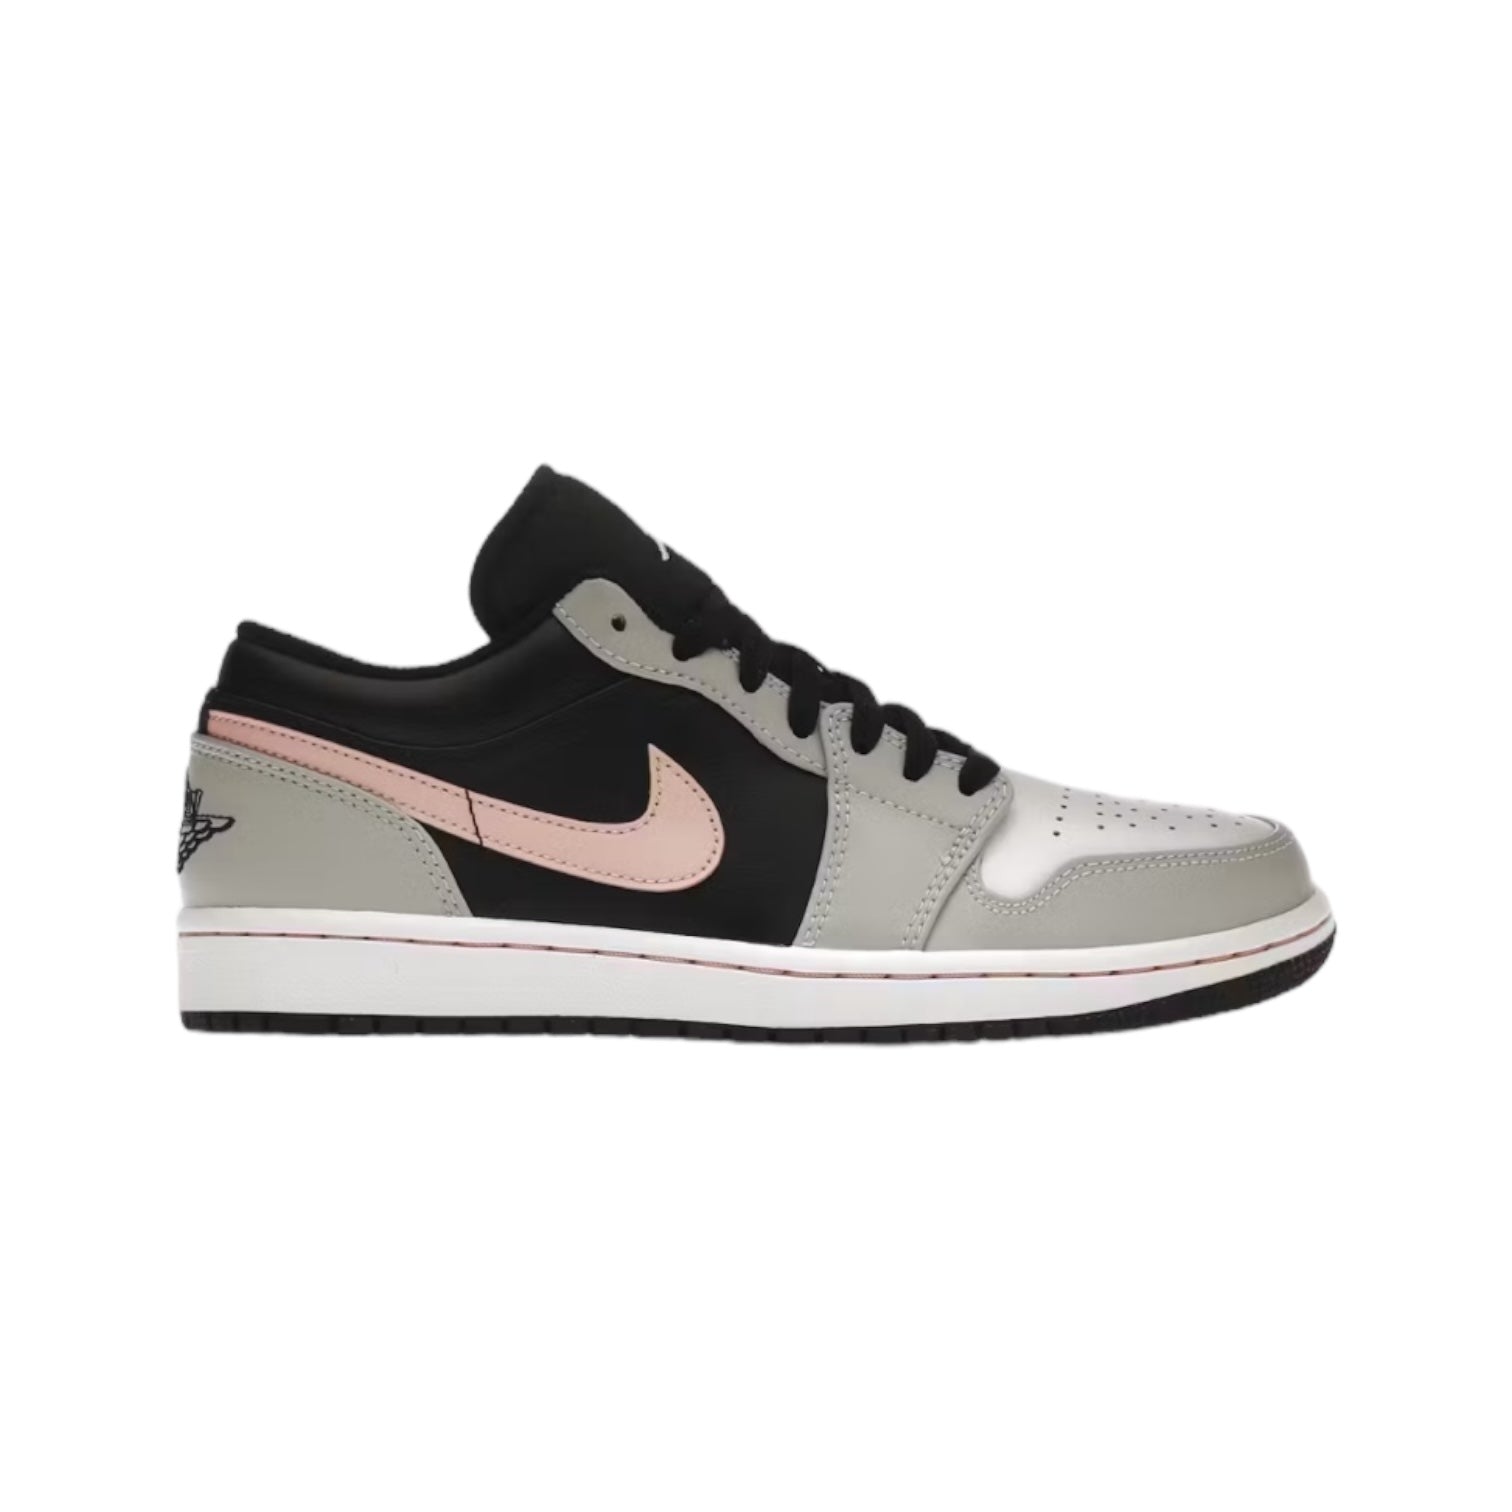 Jordan 1 Low Black/Grey/Pink